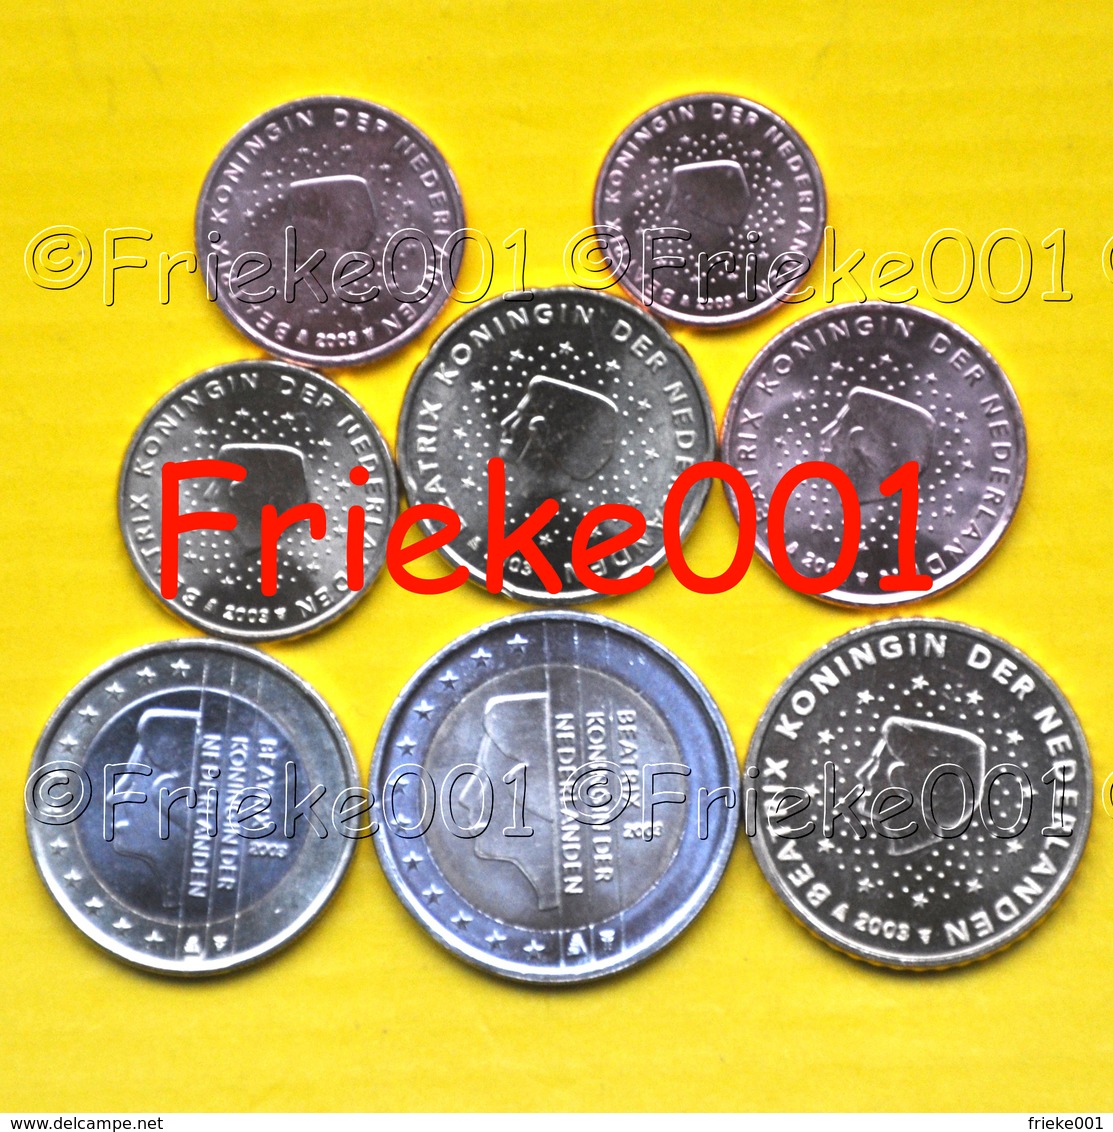 Nederland - Pays-Bas - 1 Cent Tot 2 Euro Unc 2003. - Pays-Bas